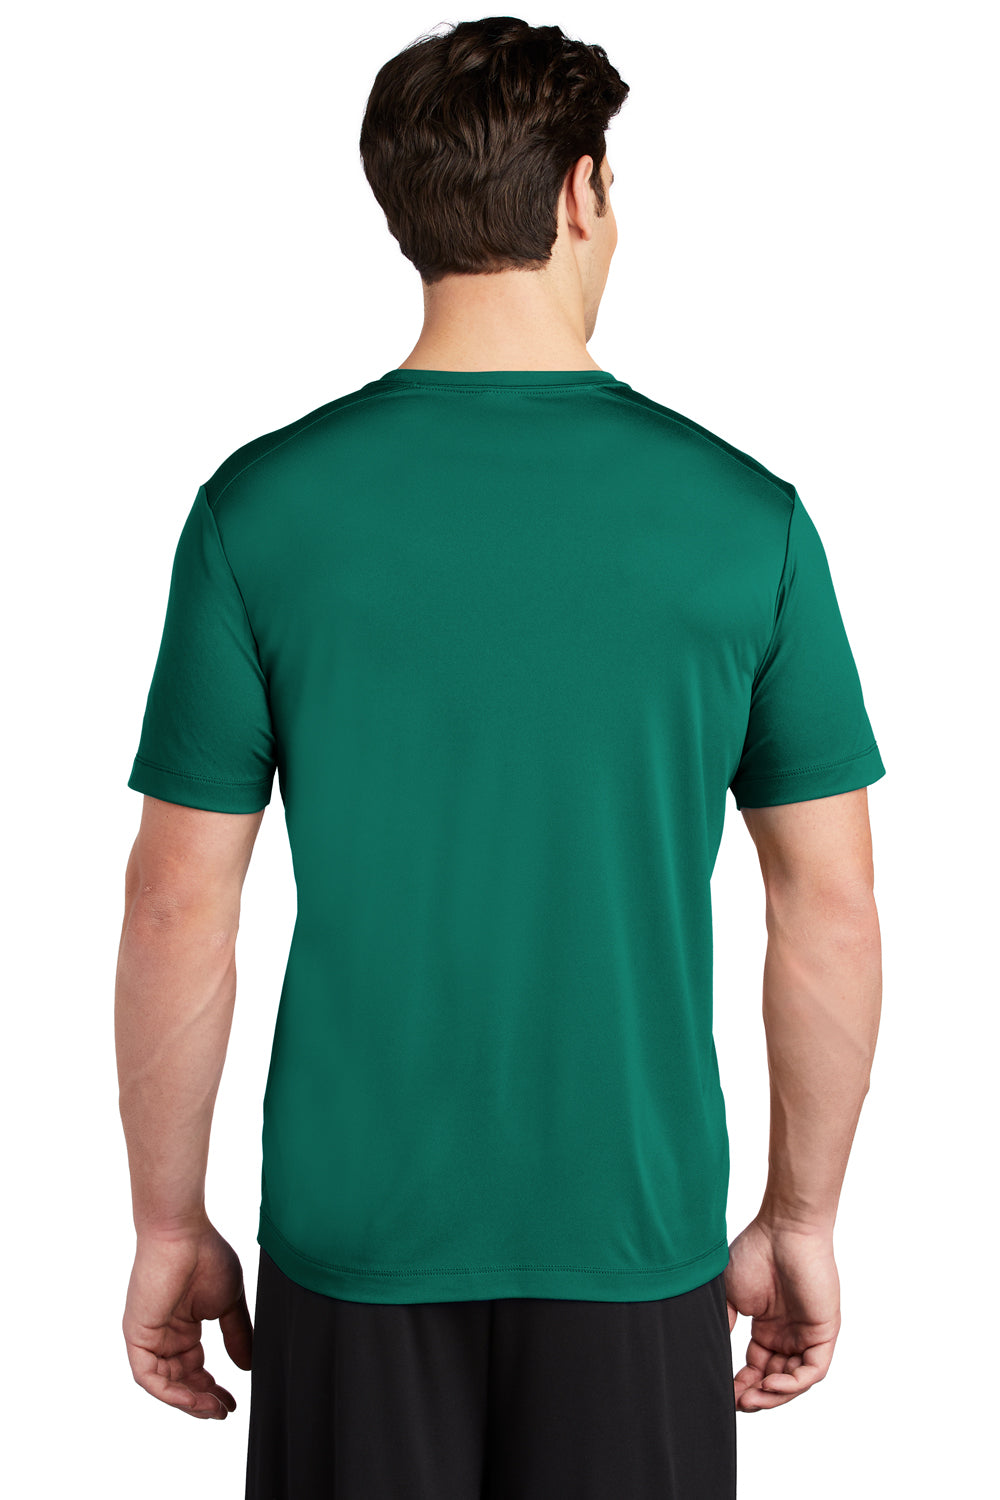 Sport-Tek Mens Short Sleeve Crewneck T-Shirt Marine Green Side